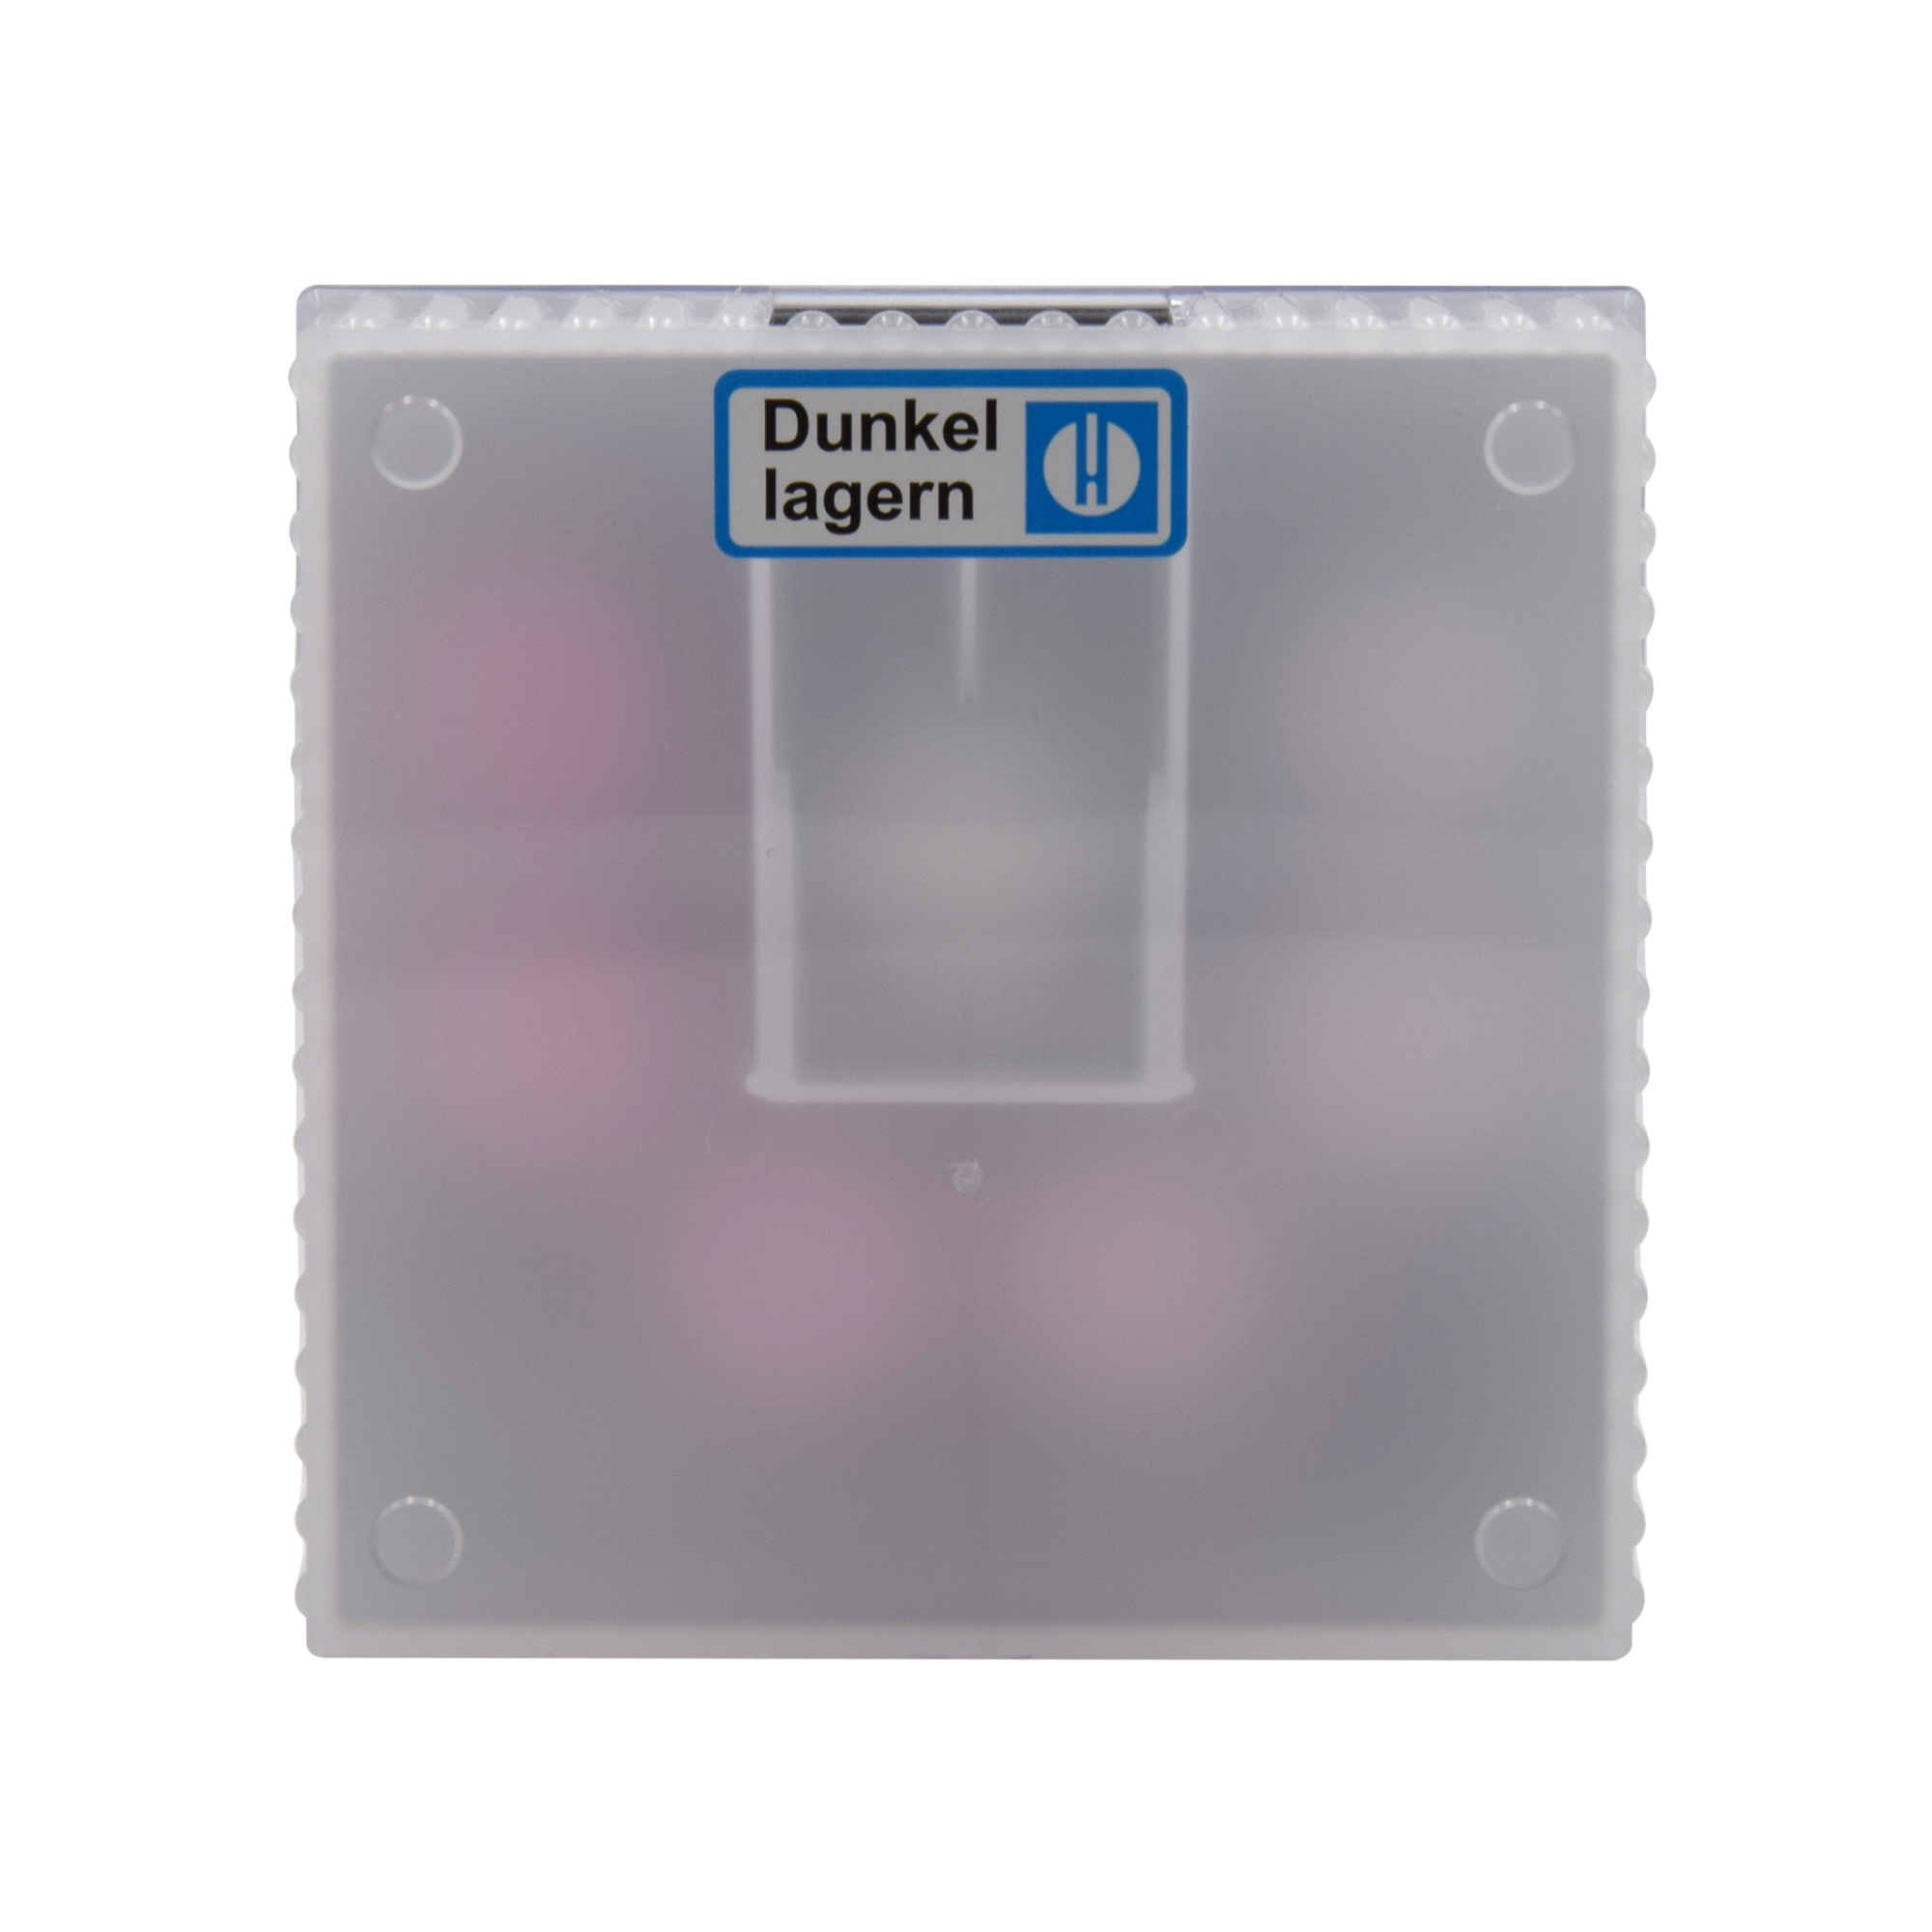 Chlor DPD 0,1–1 mg/l - Farbvergleichsgerät Testoval